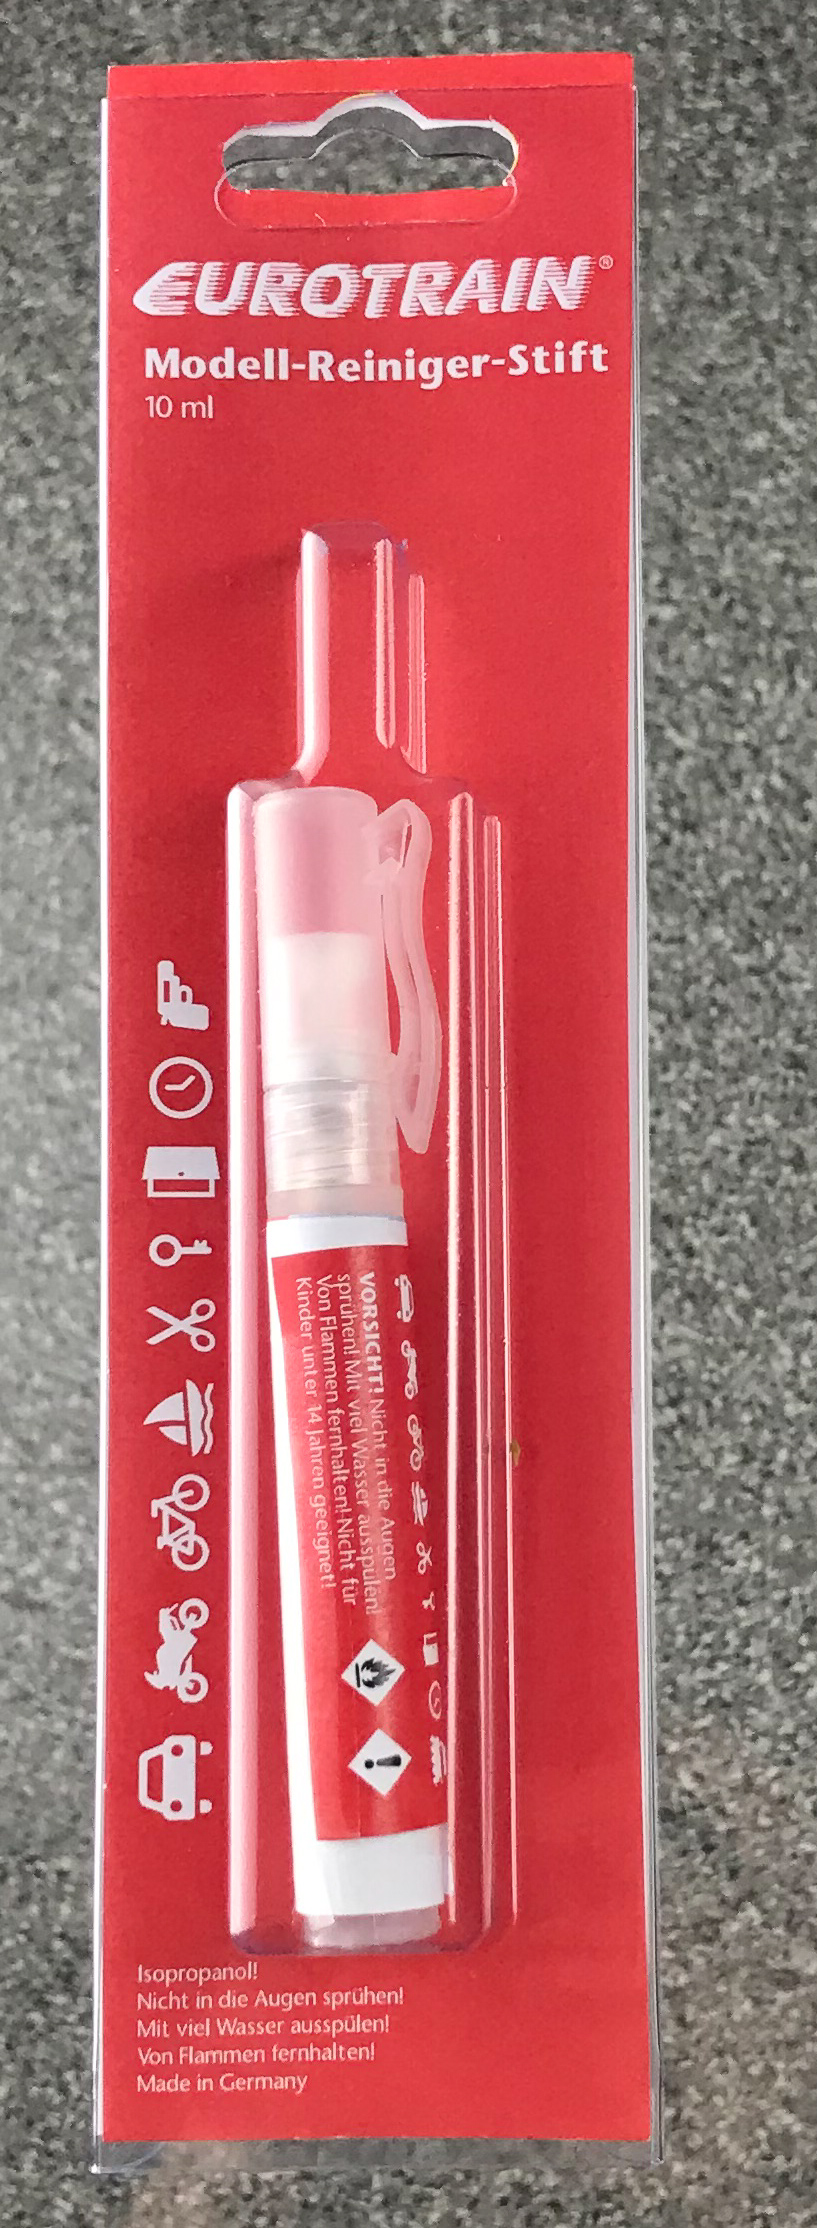 Modell-Reiniger-Stift 10 ml 